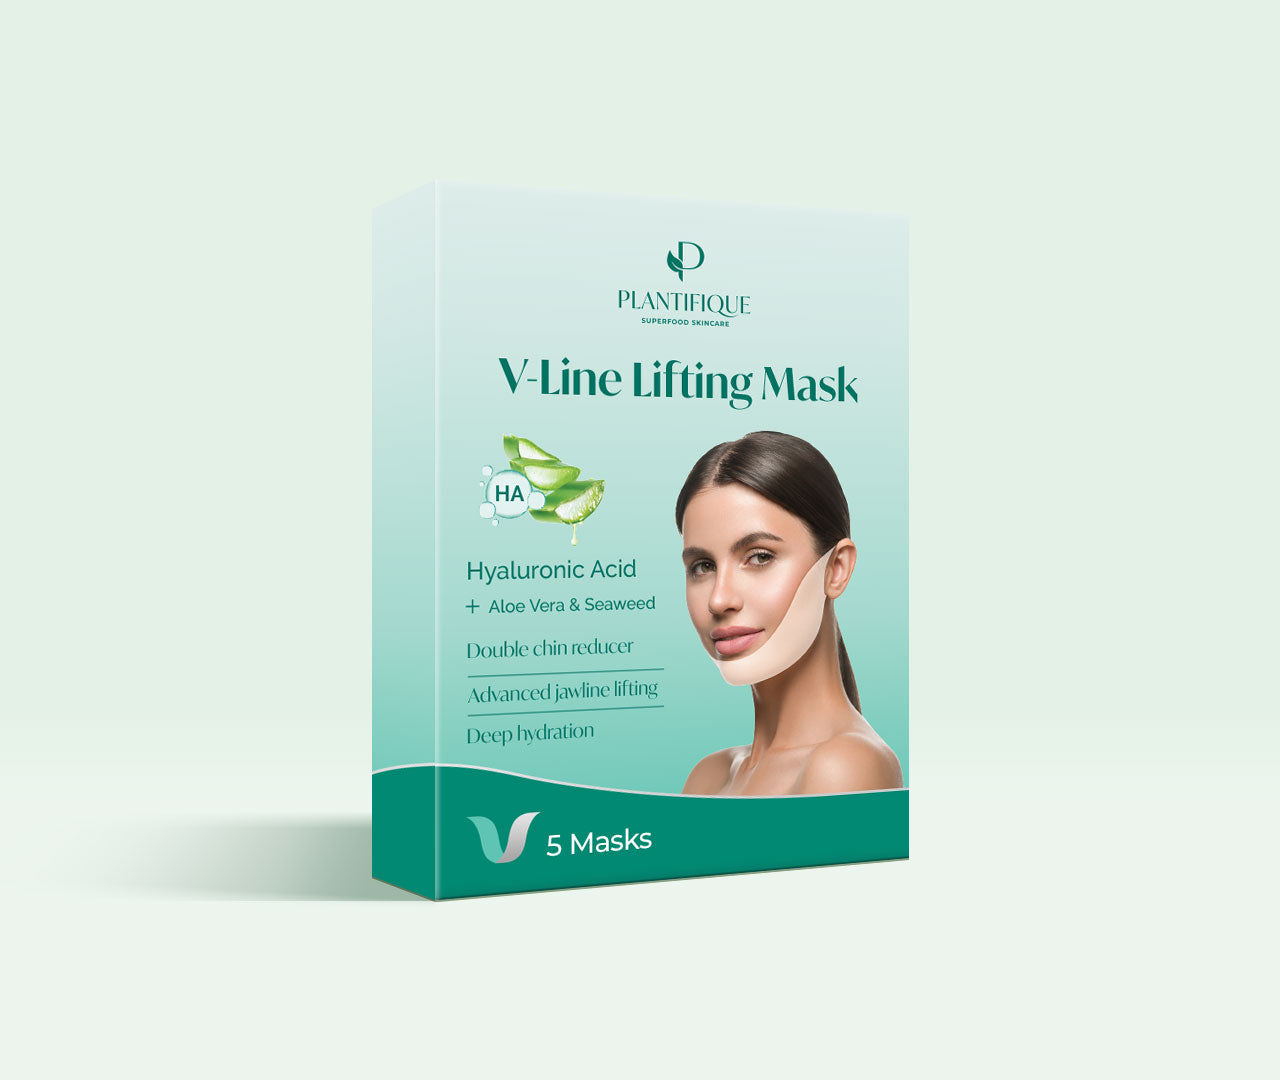  V-Line Lifting Face Mask By Plantifique - 10 PCS V